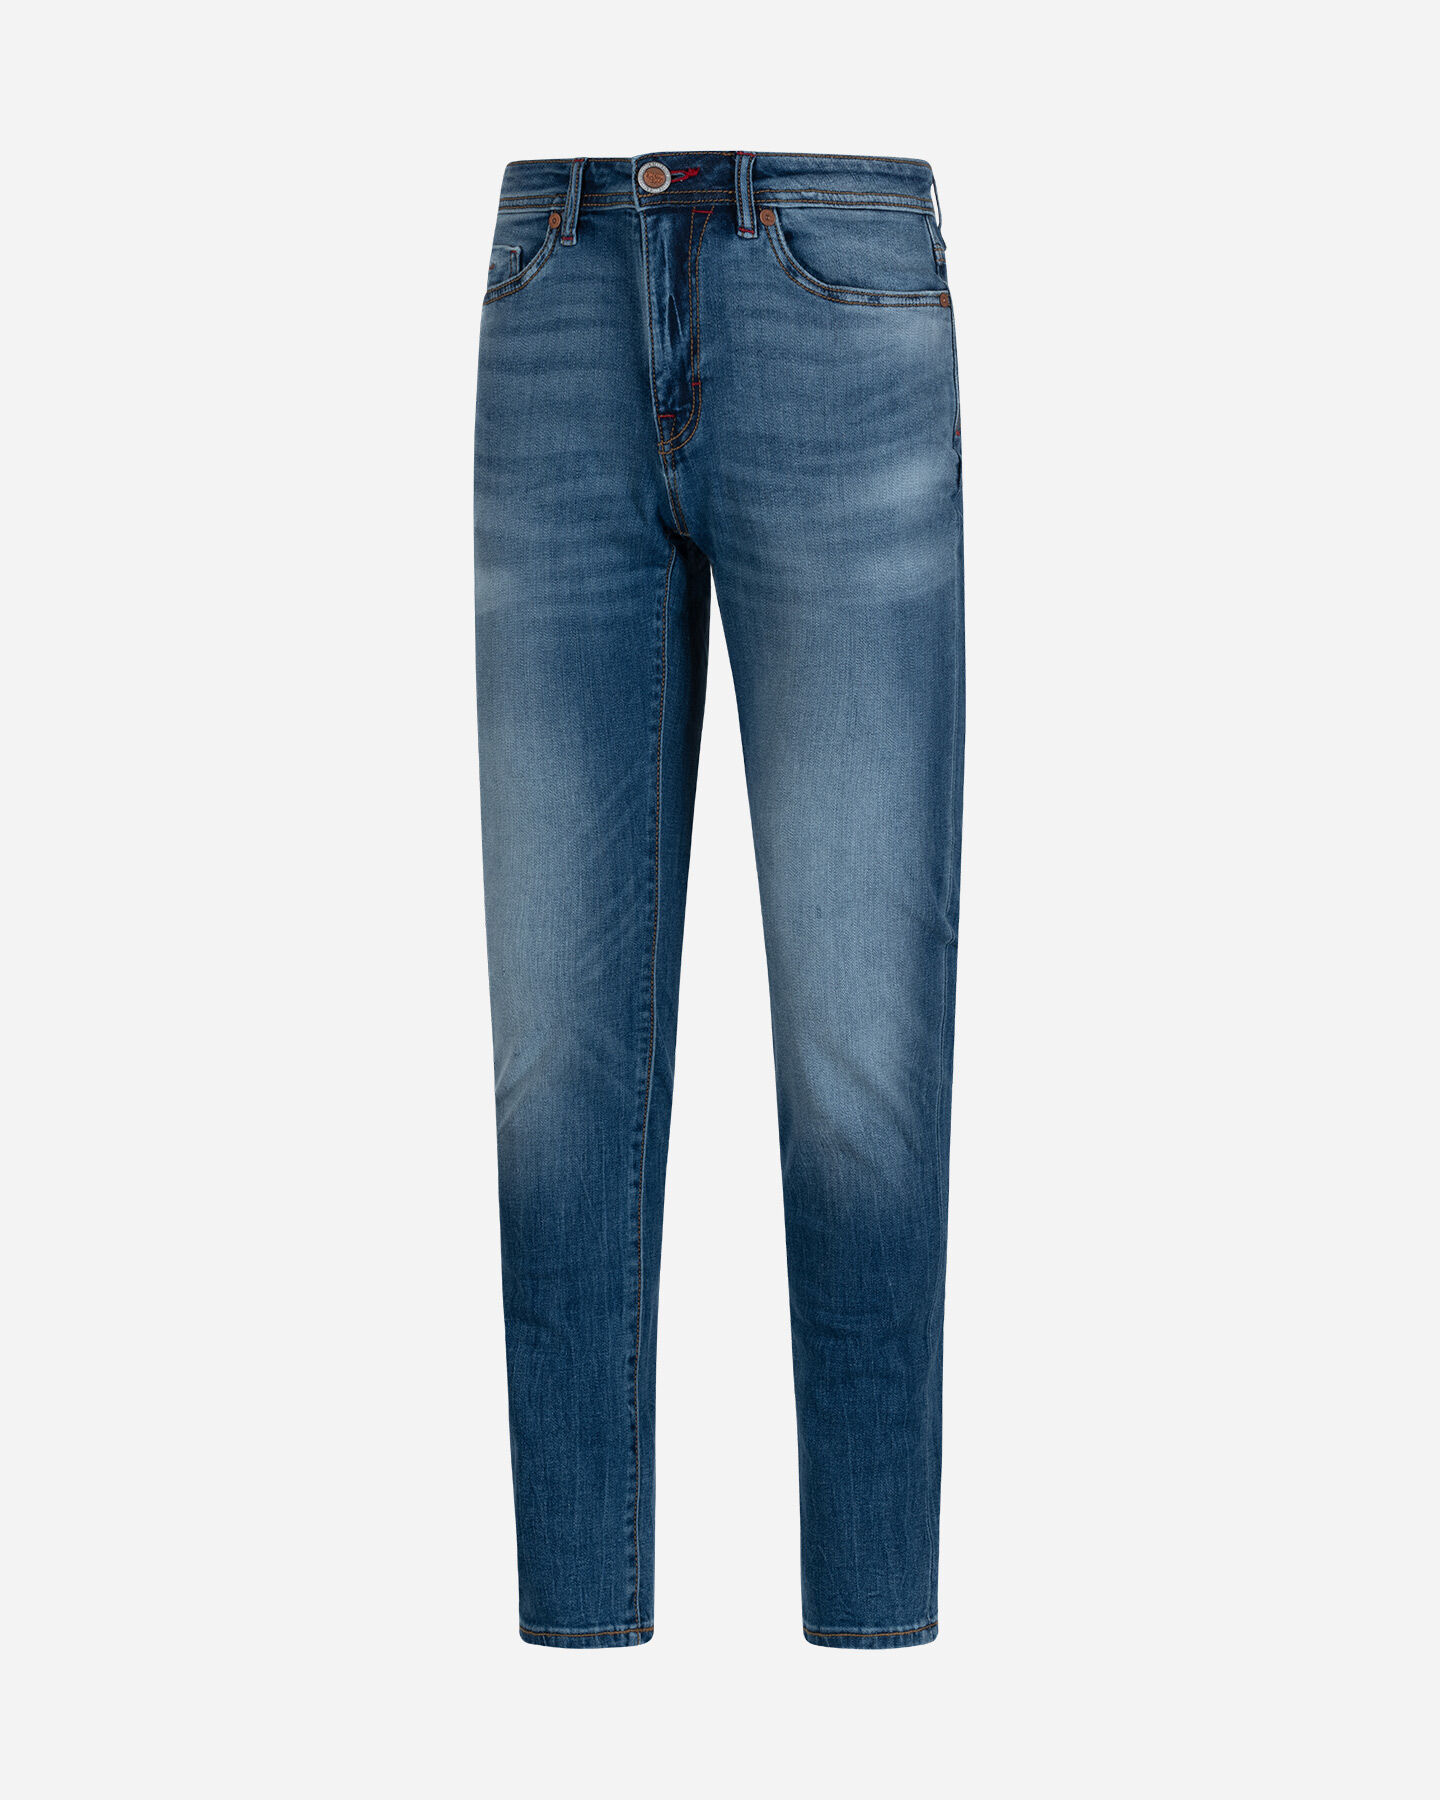  Jeans COTTON BELT 5 POCKET M S4126998|MD|30 scatto 4